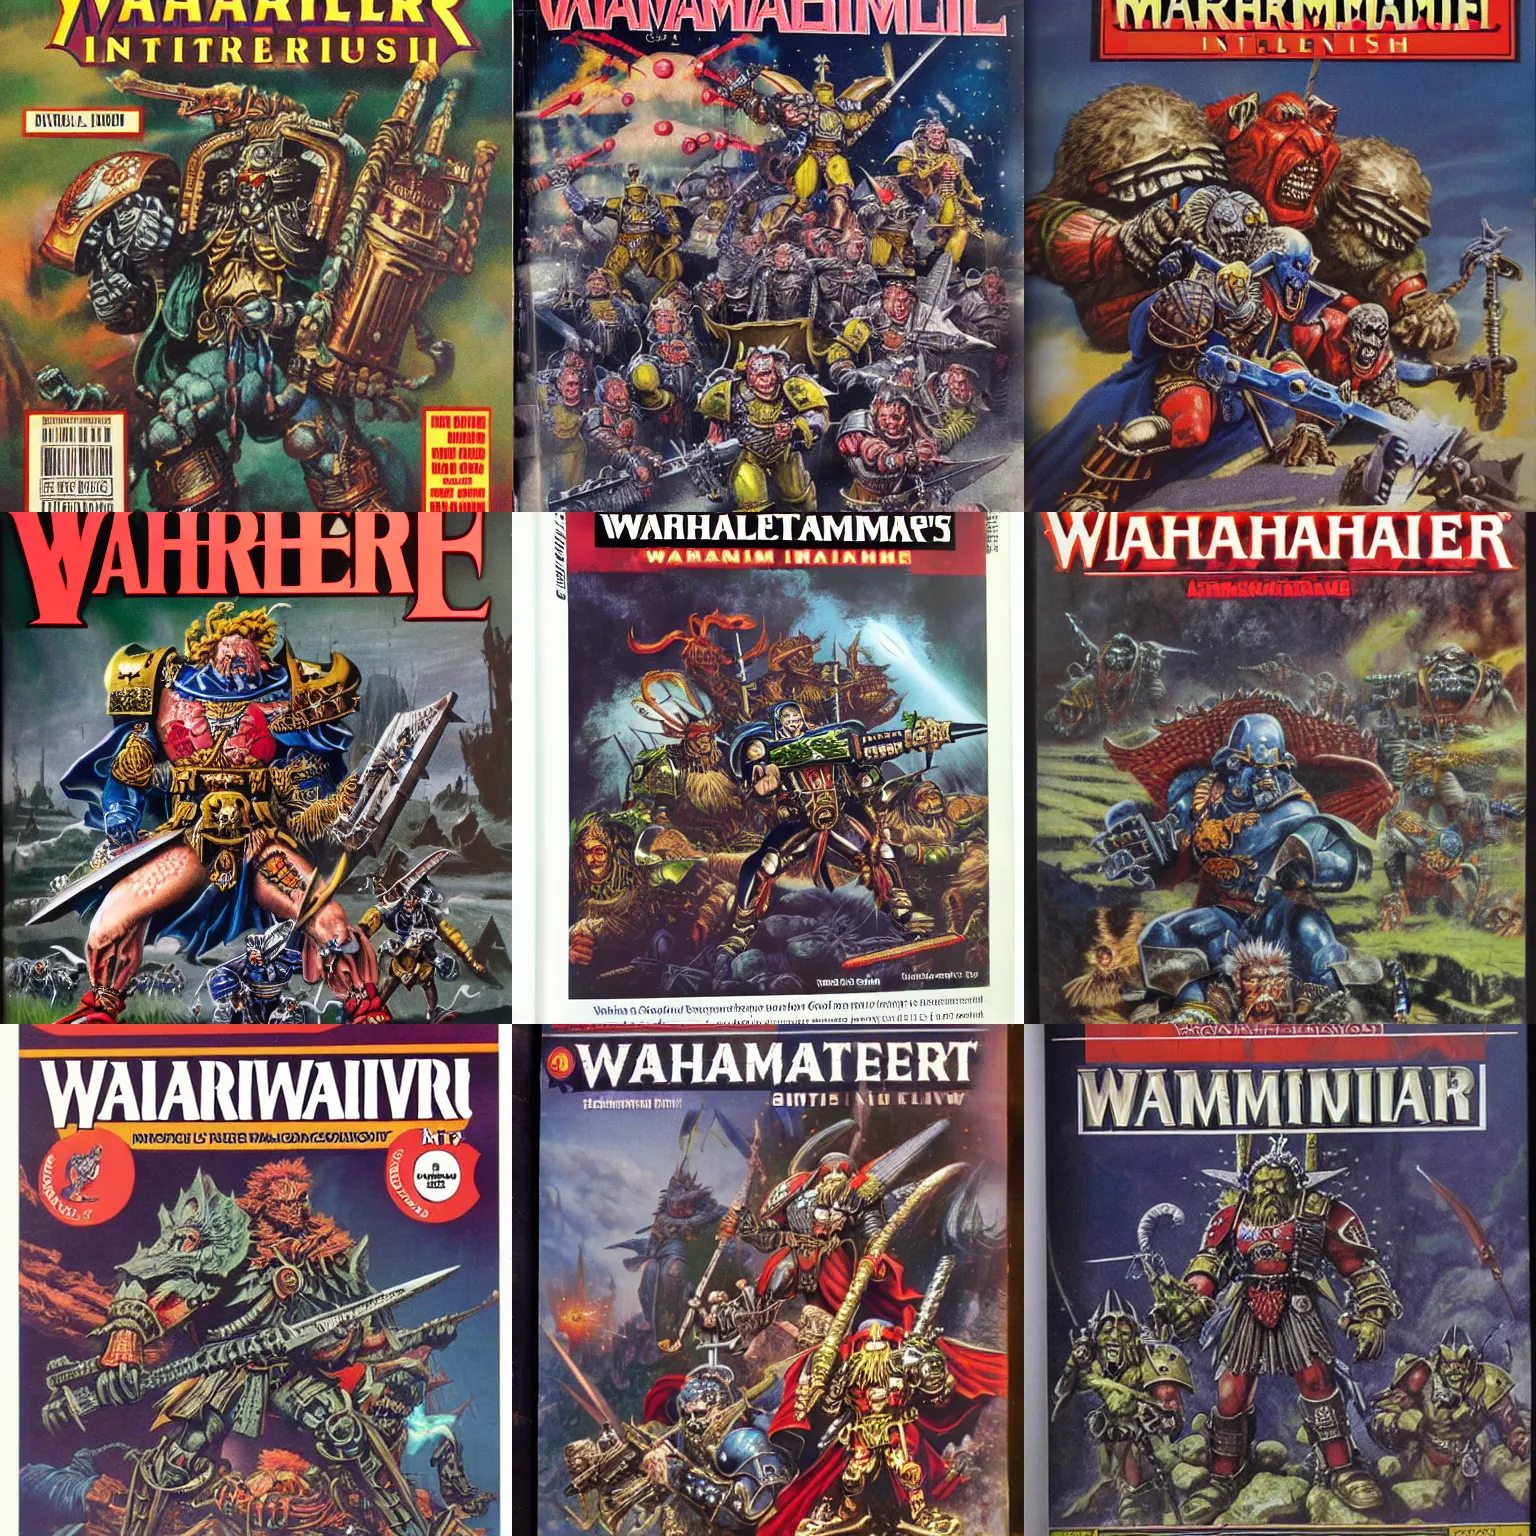 Prompt: warhammer illustrated by john blanche, kev walker, 1989